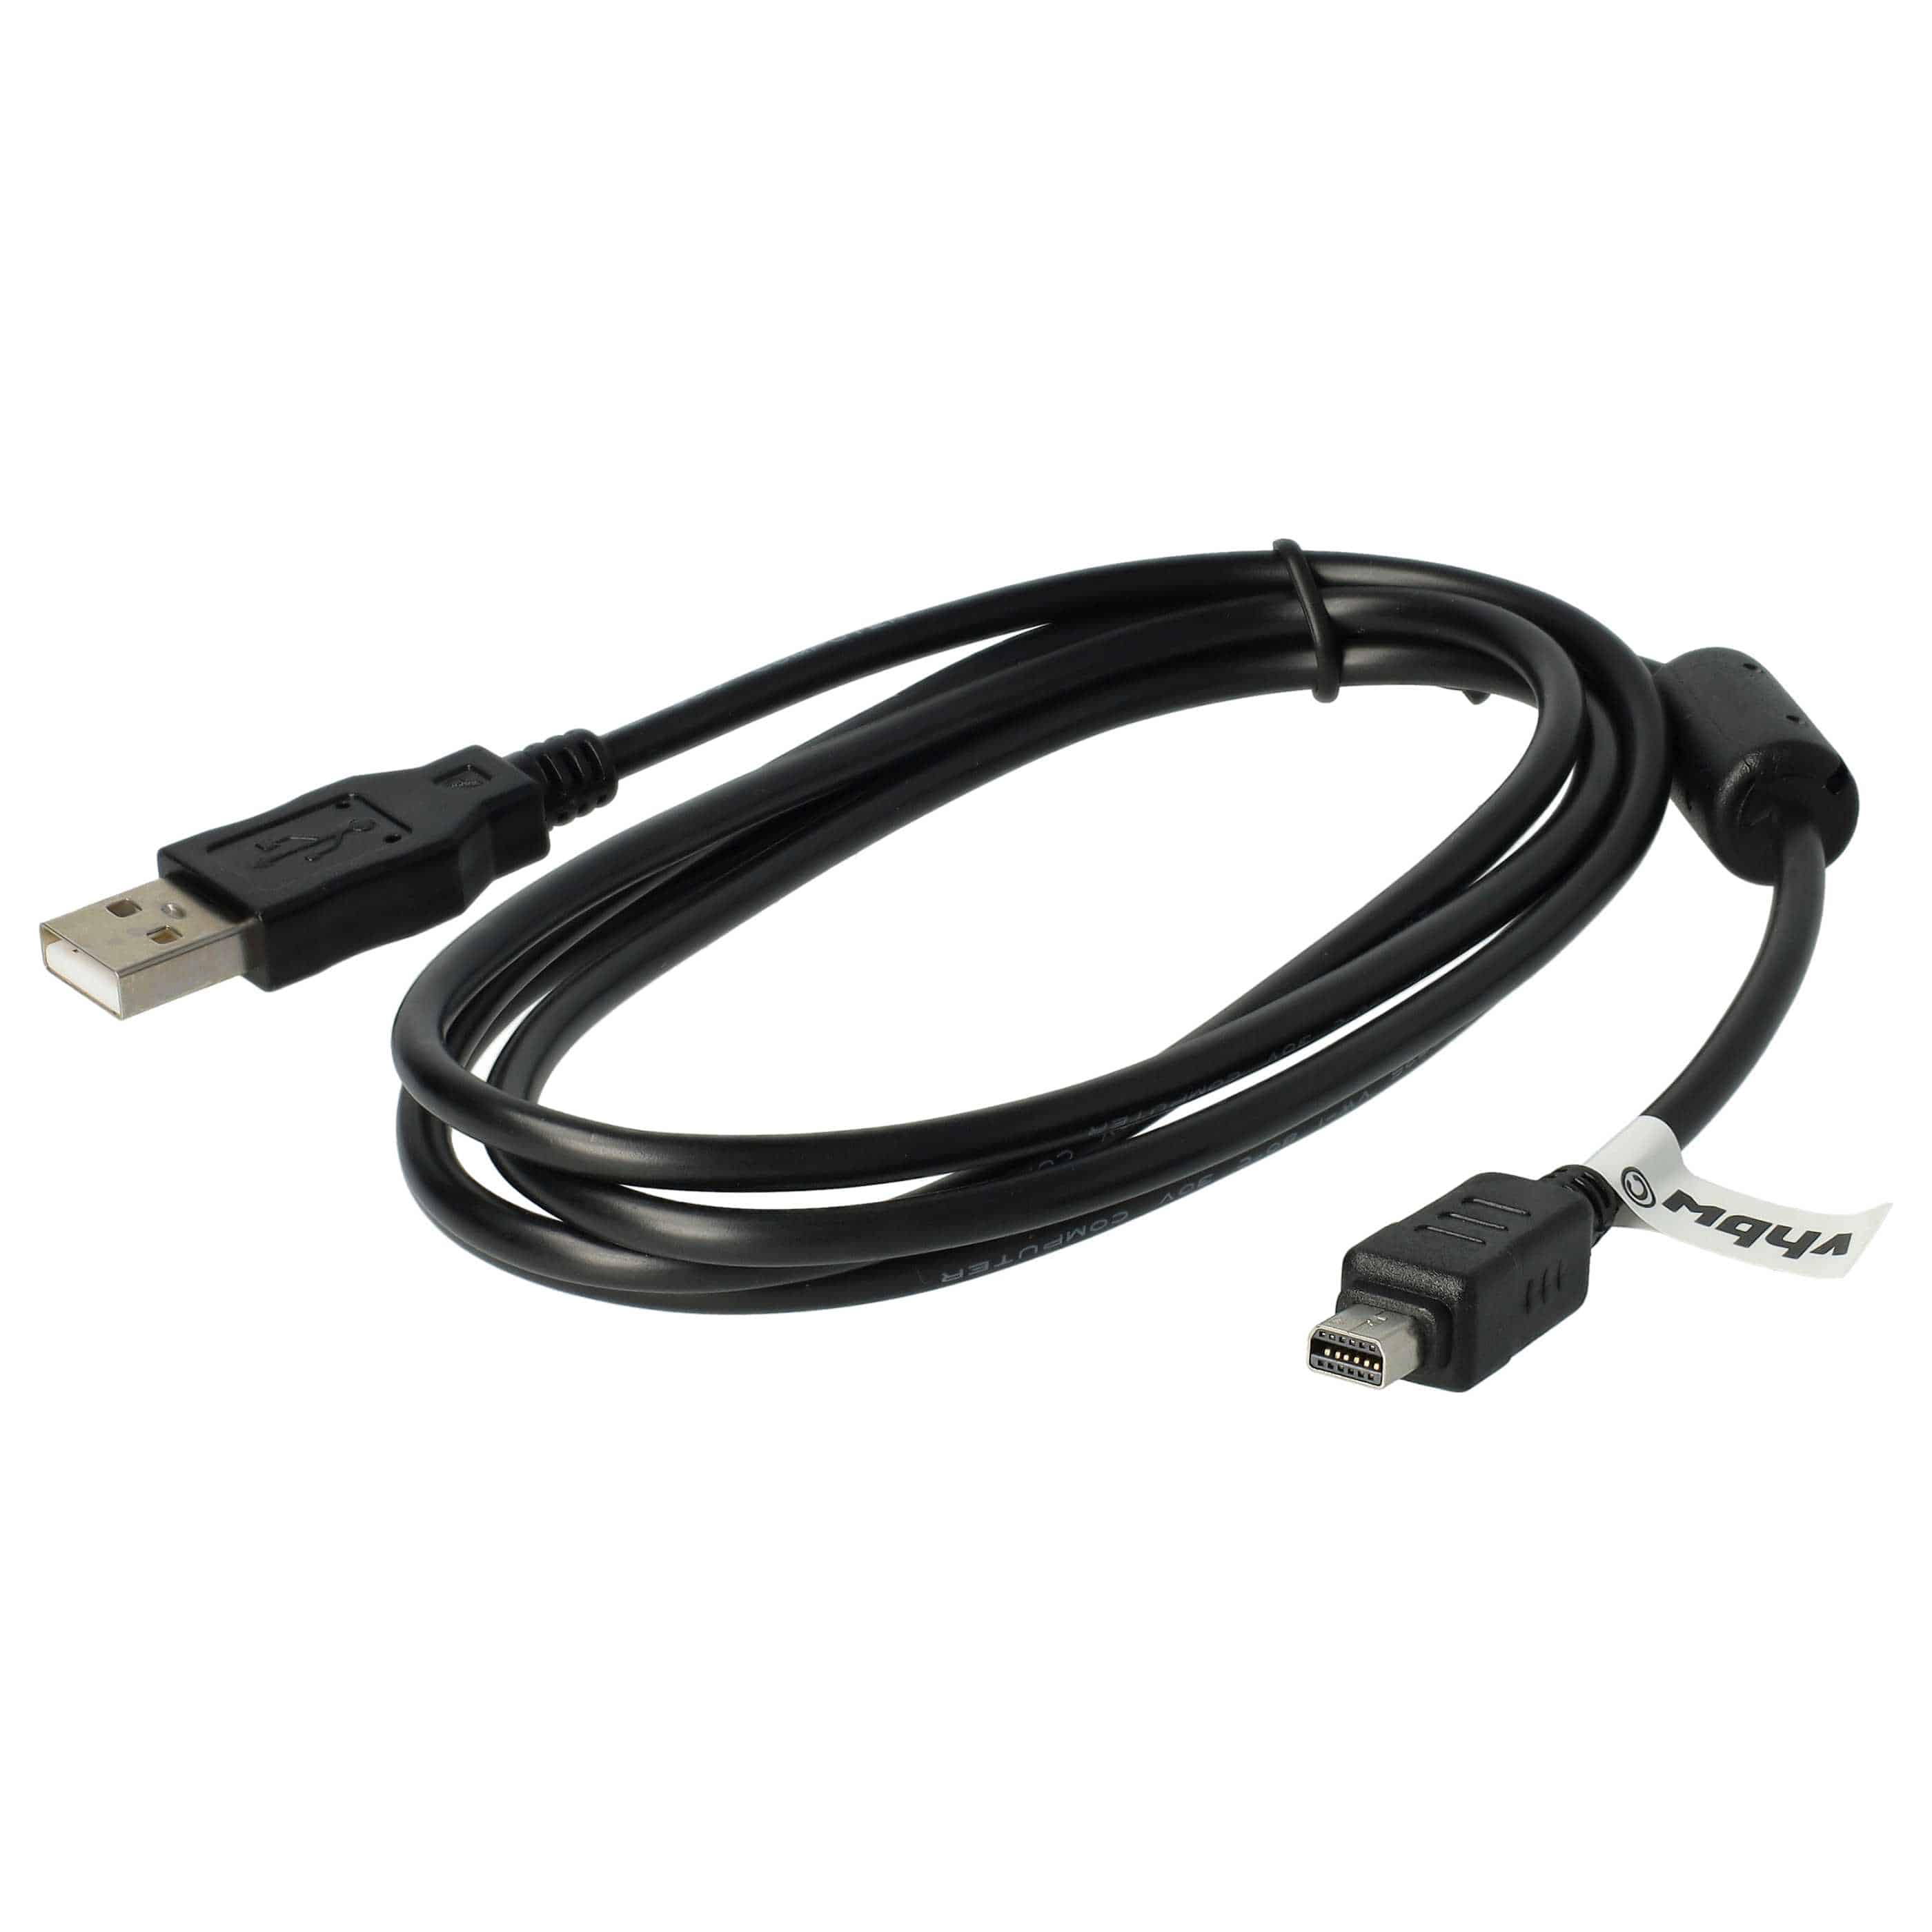 USB Datenkabel als Ersatz für Olympus CB-USB6, CB-USB5, CB-USB8 für Kamera - 150 cm